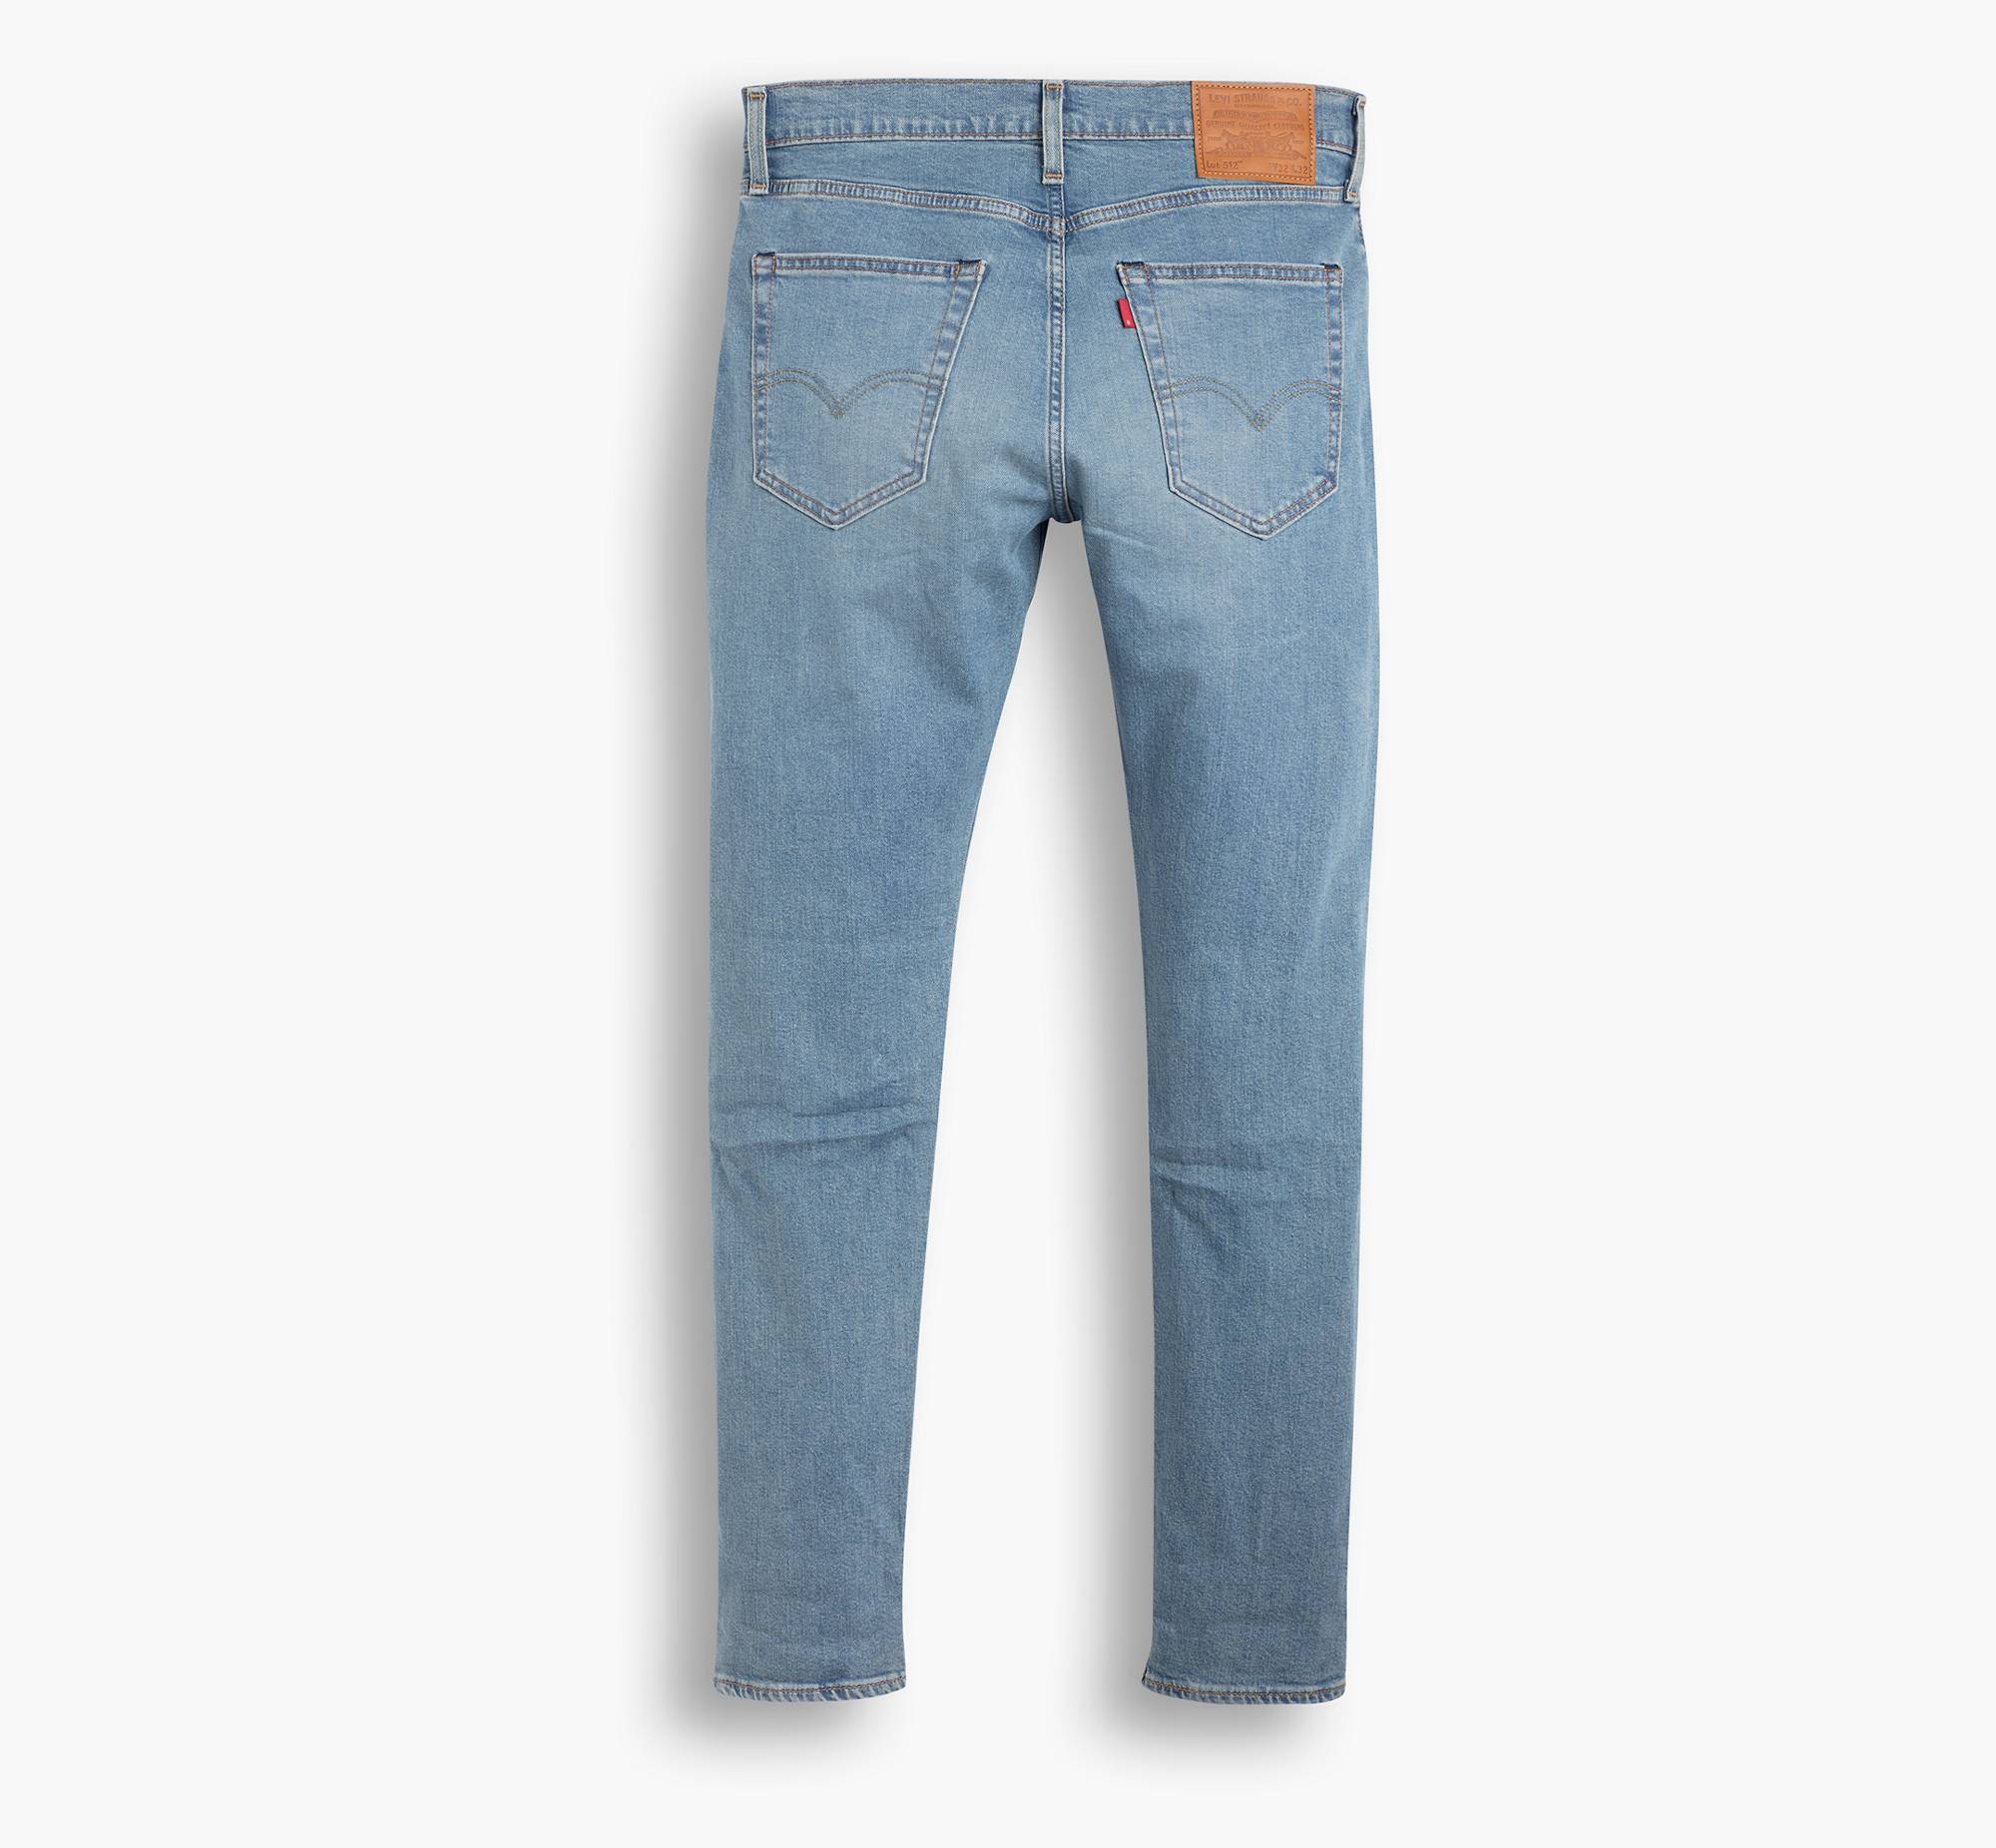 512™ Slim Tapered Jeans 6